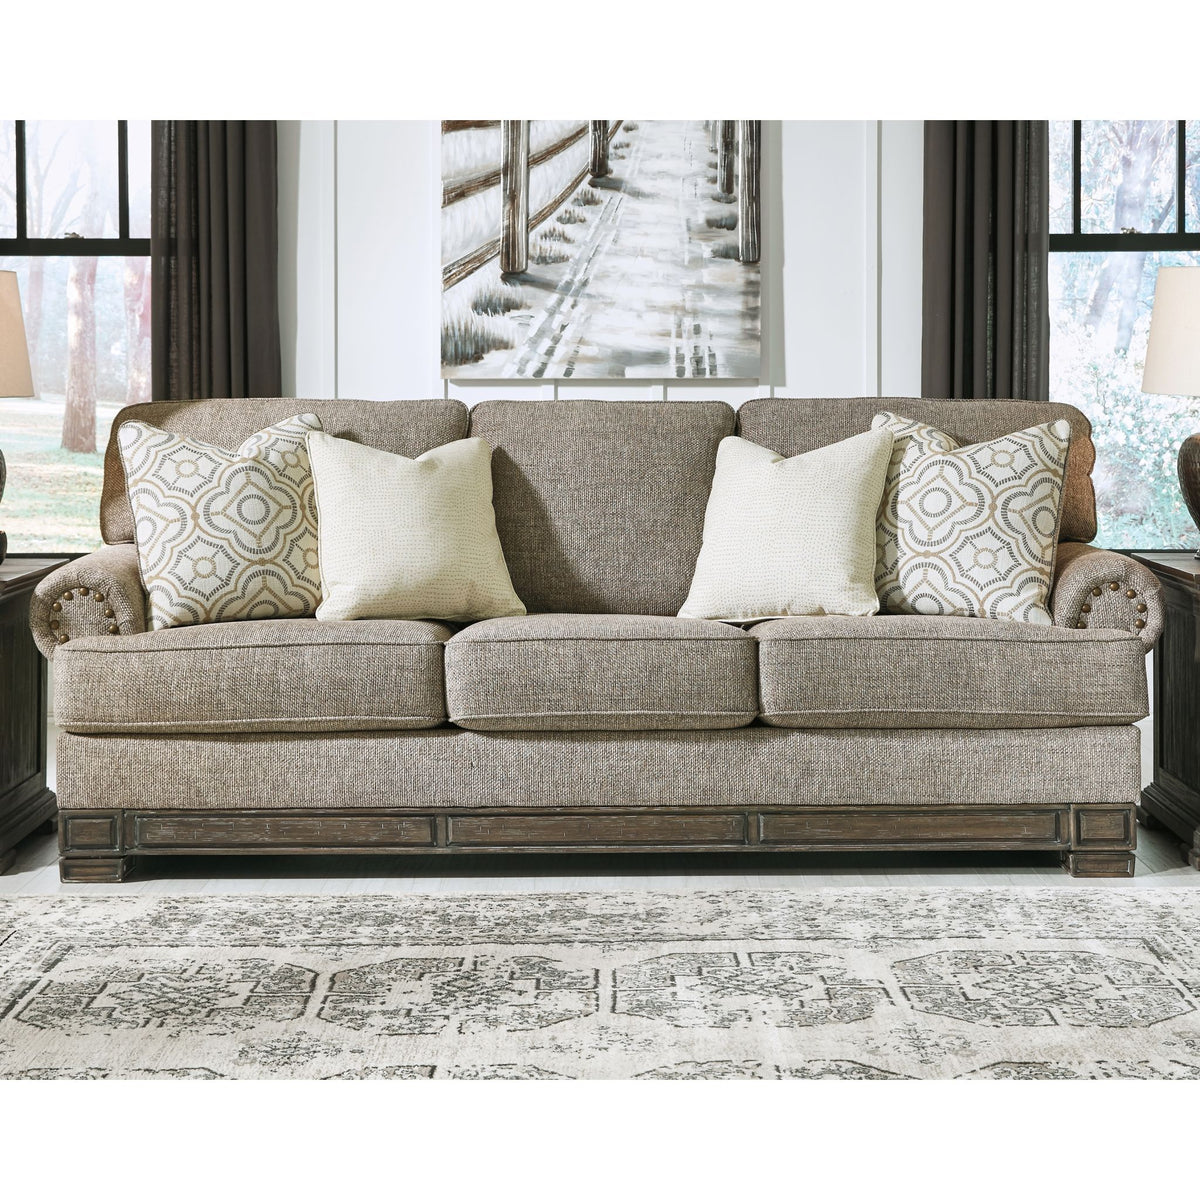 Einsgrove Sofa - Sandstone | Dufresne Furniture and Appliances